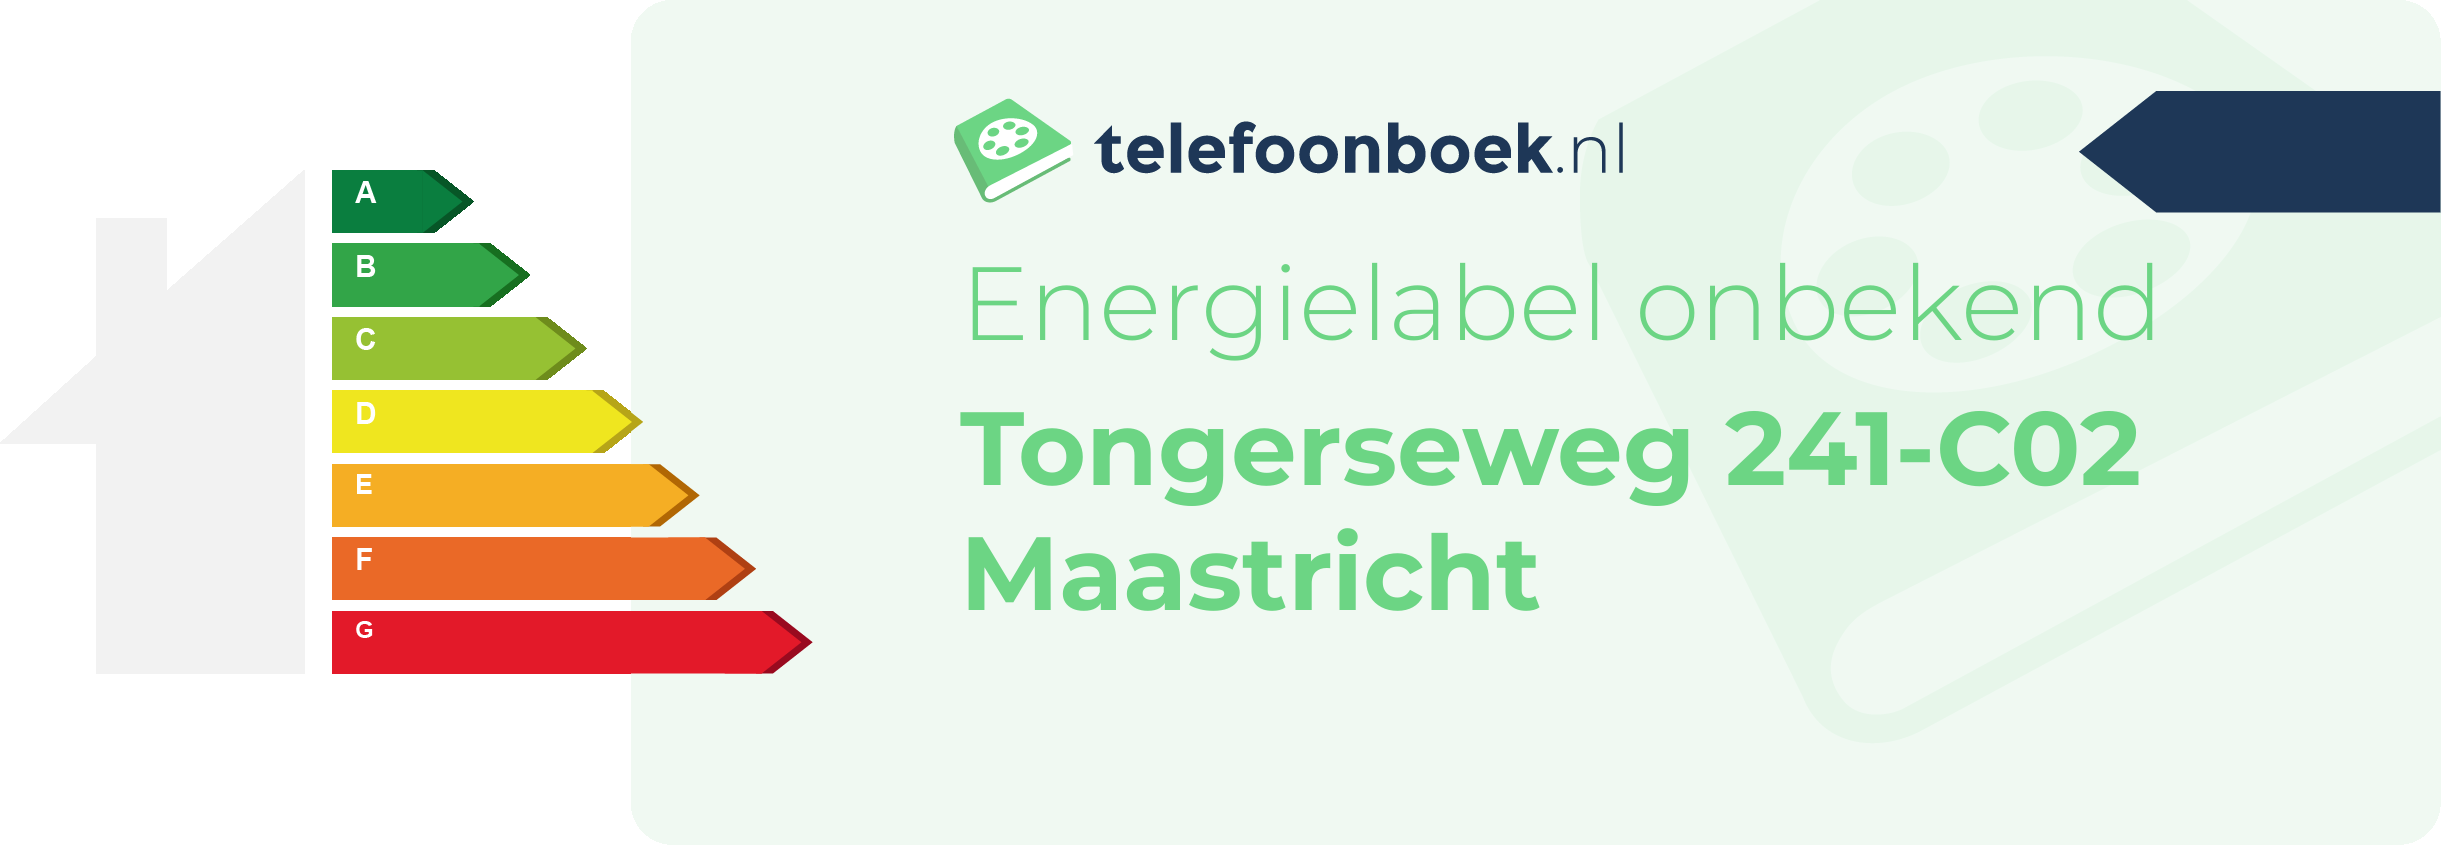 Energielabel Tongerseweg 241-C02 Maastricht